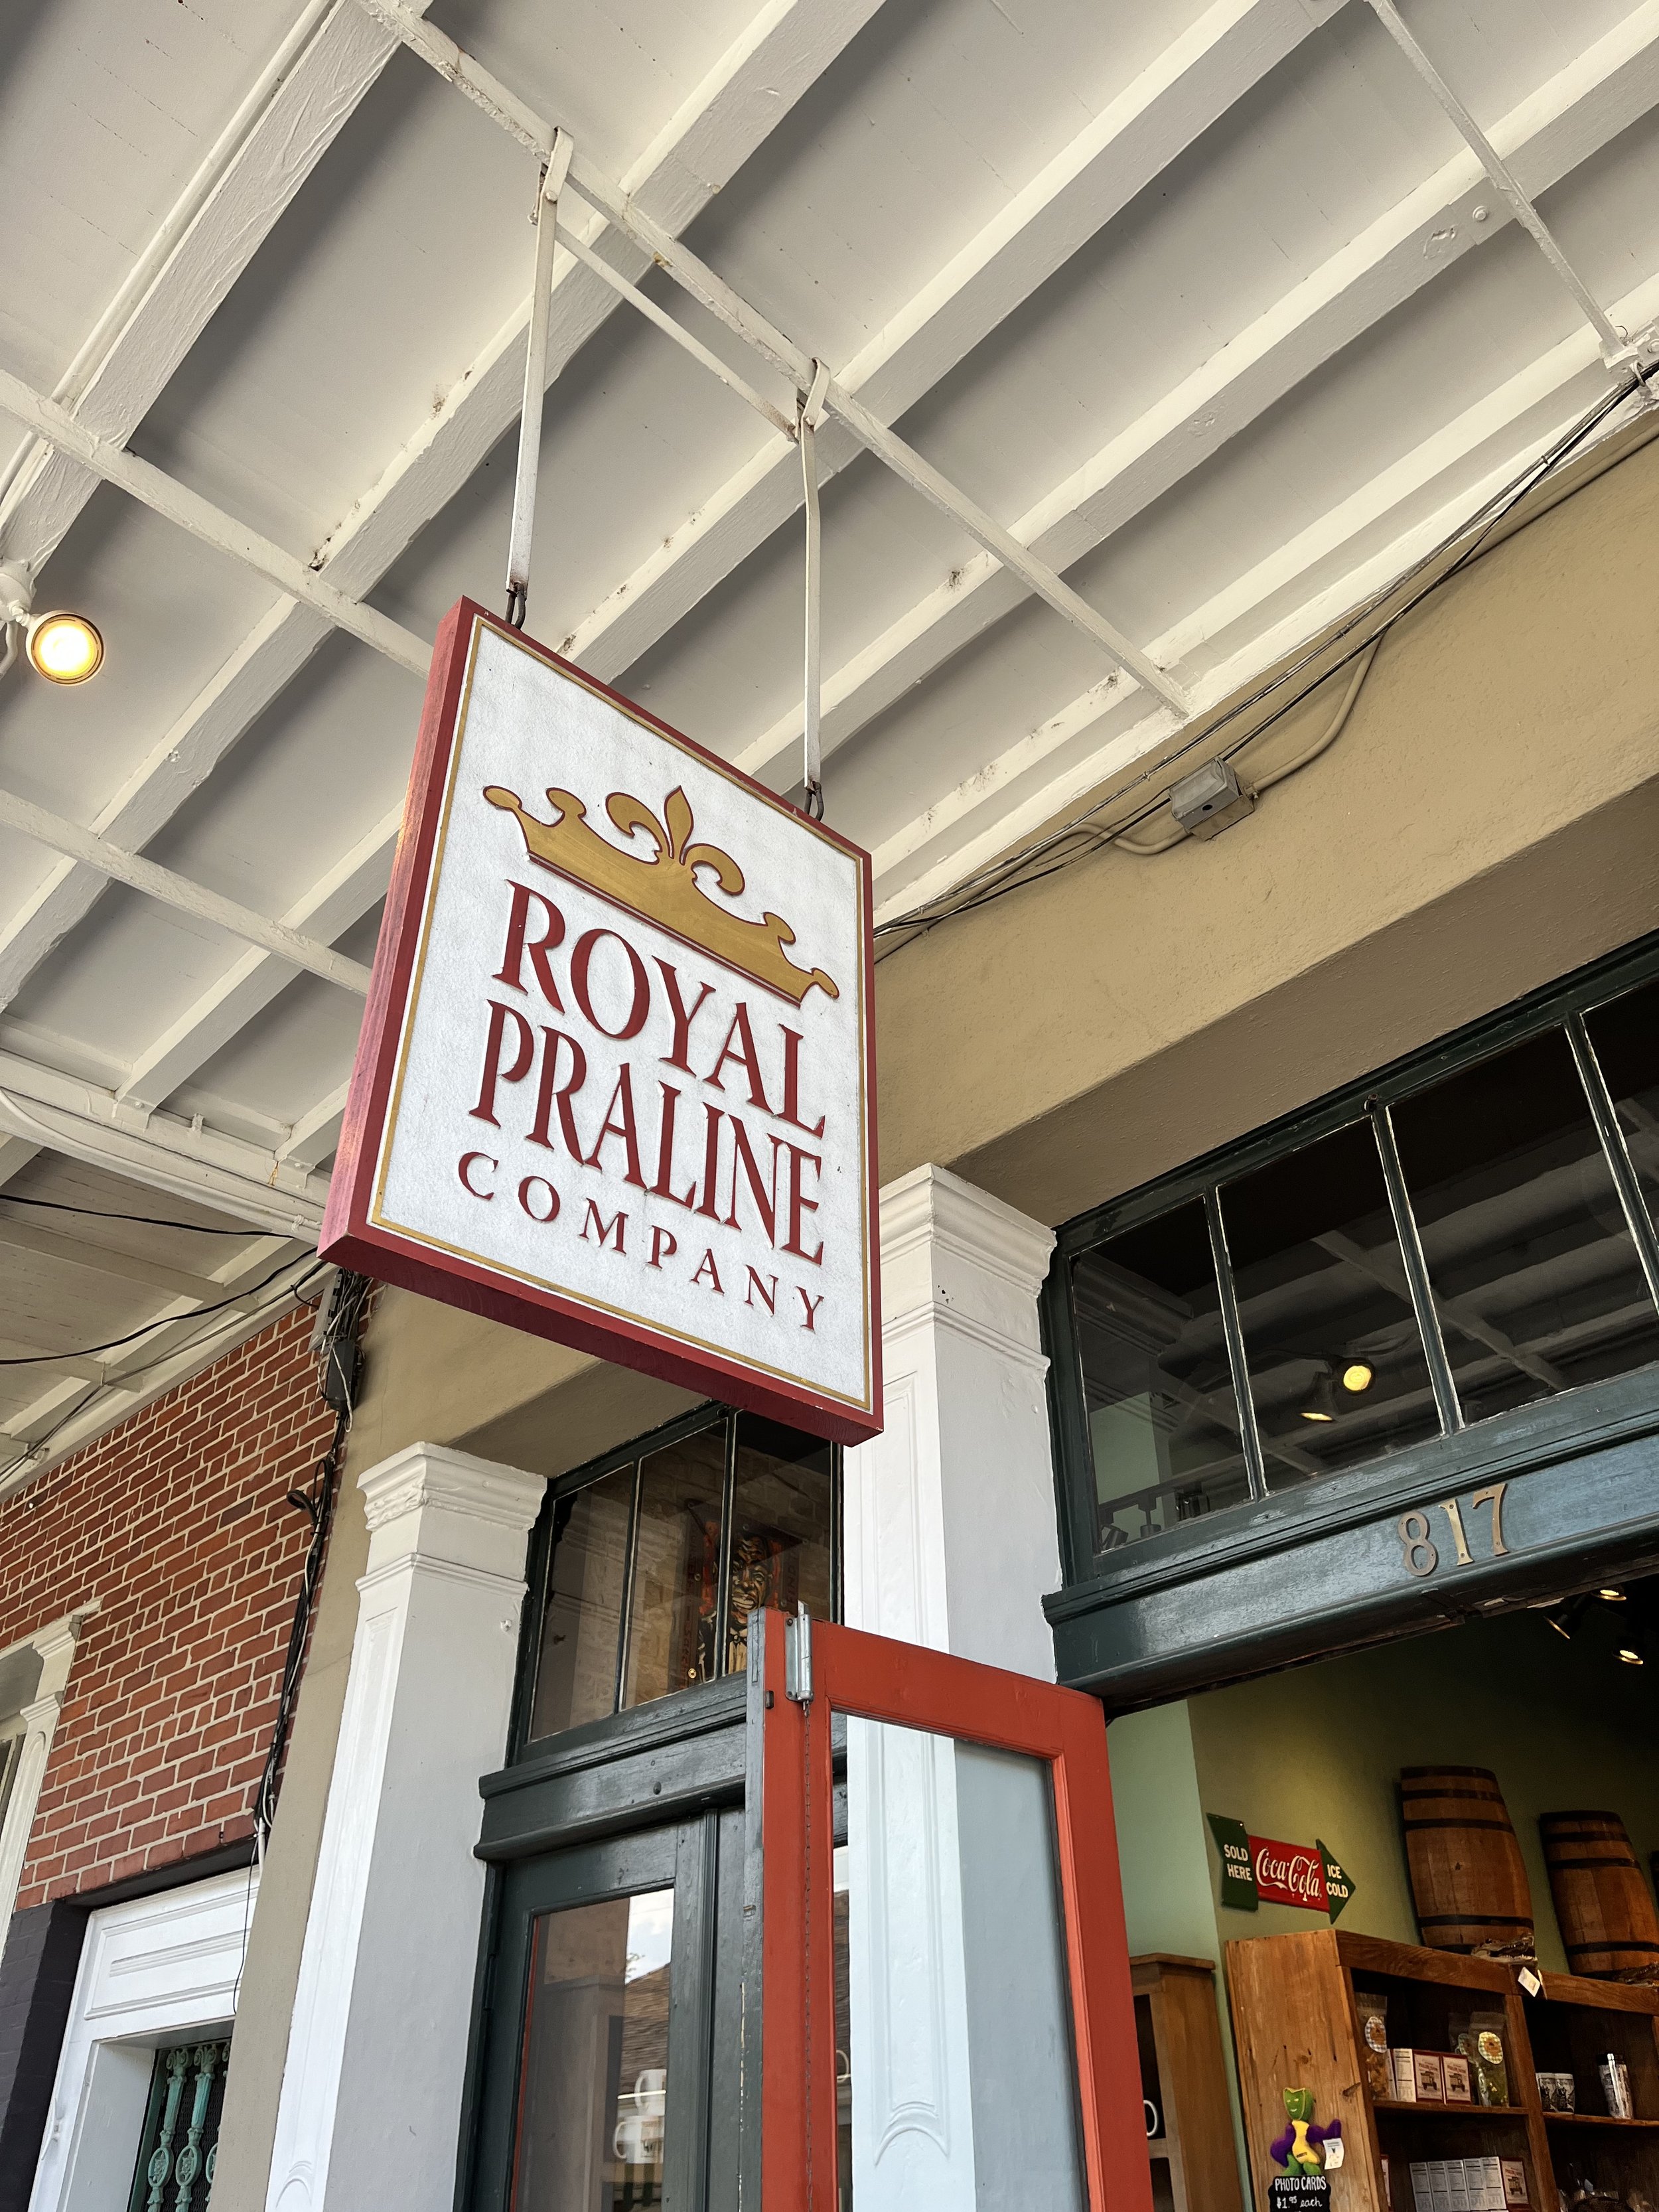 Royal Praline Company sign New Orleans LA.jpg